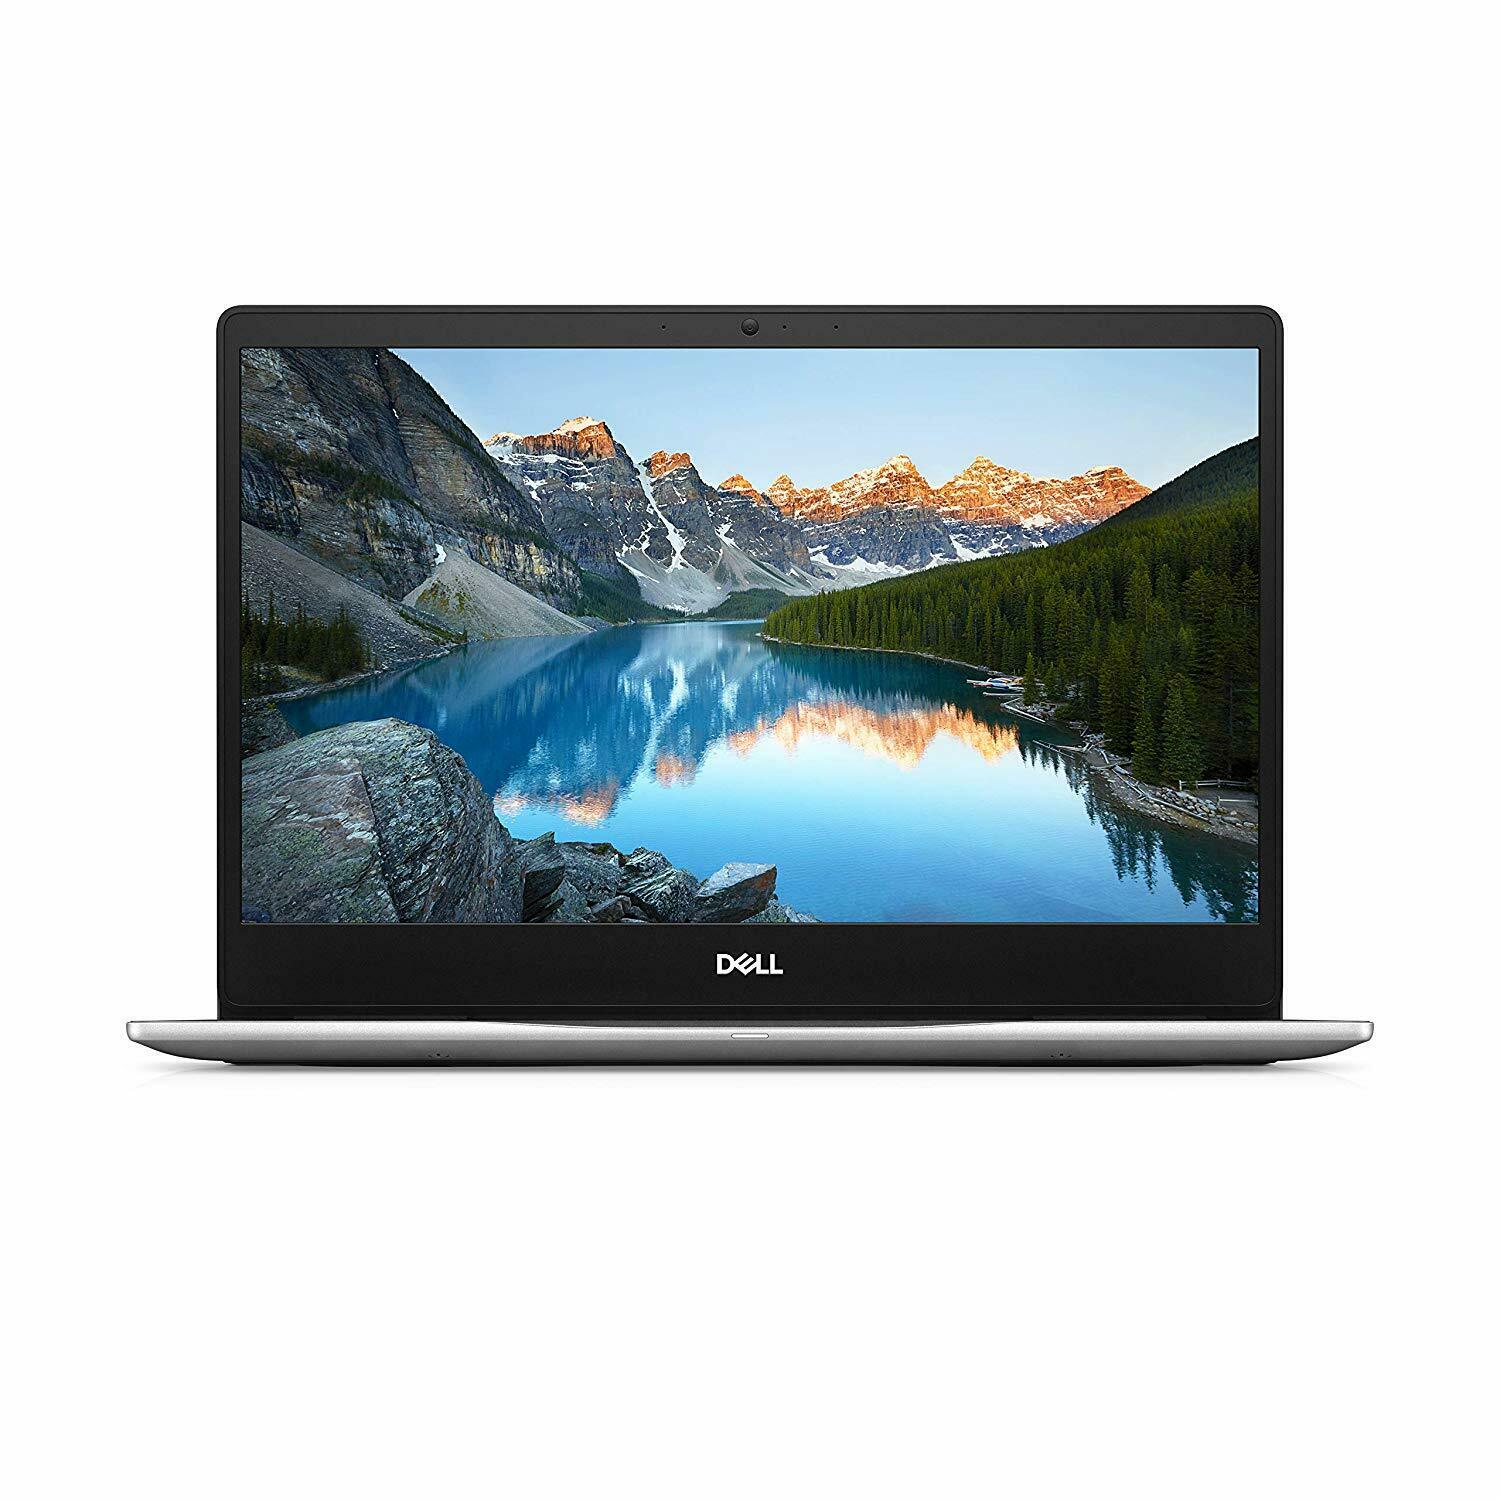 Dell Inspiron 13 7380 Laptop, Intel Core i7, 16GB RAM, 512GB SSD, 13.3” Full HD, Silver - Refurbished Pristine